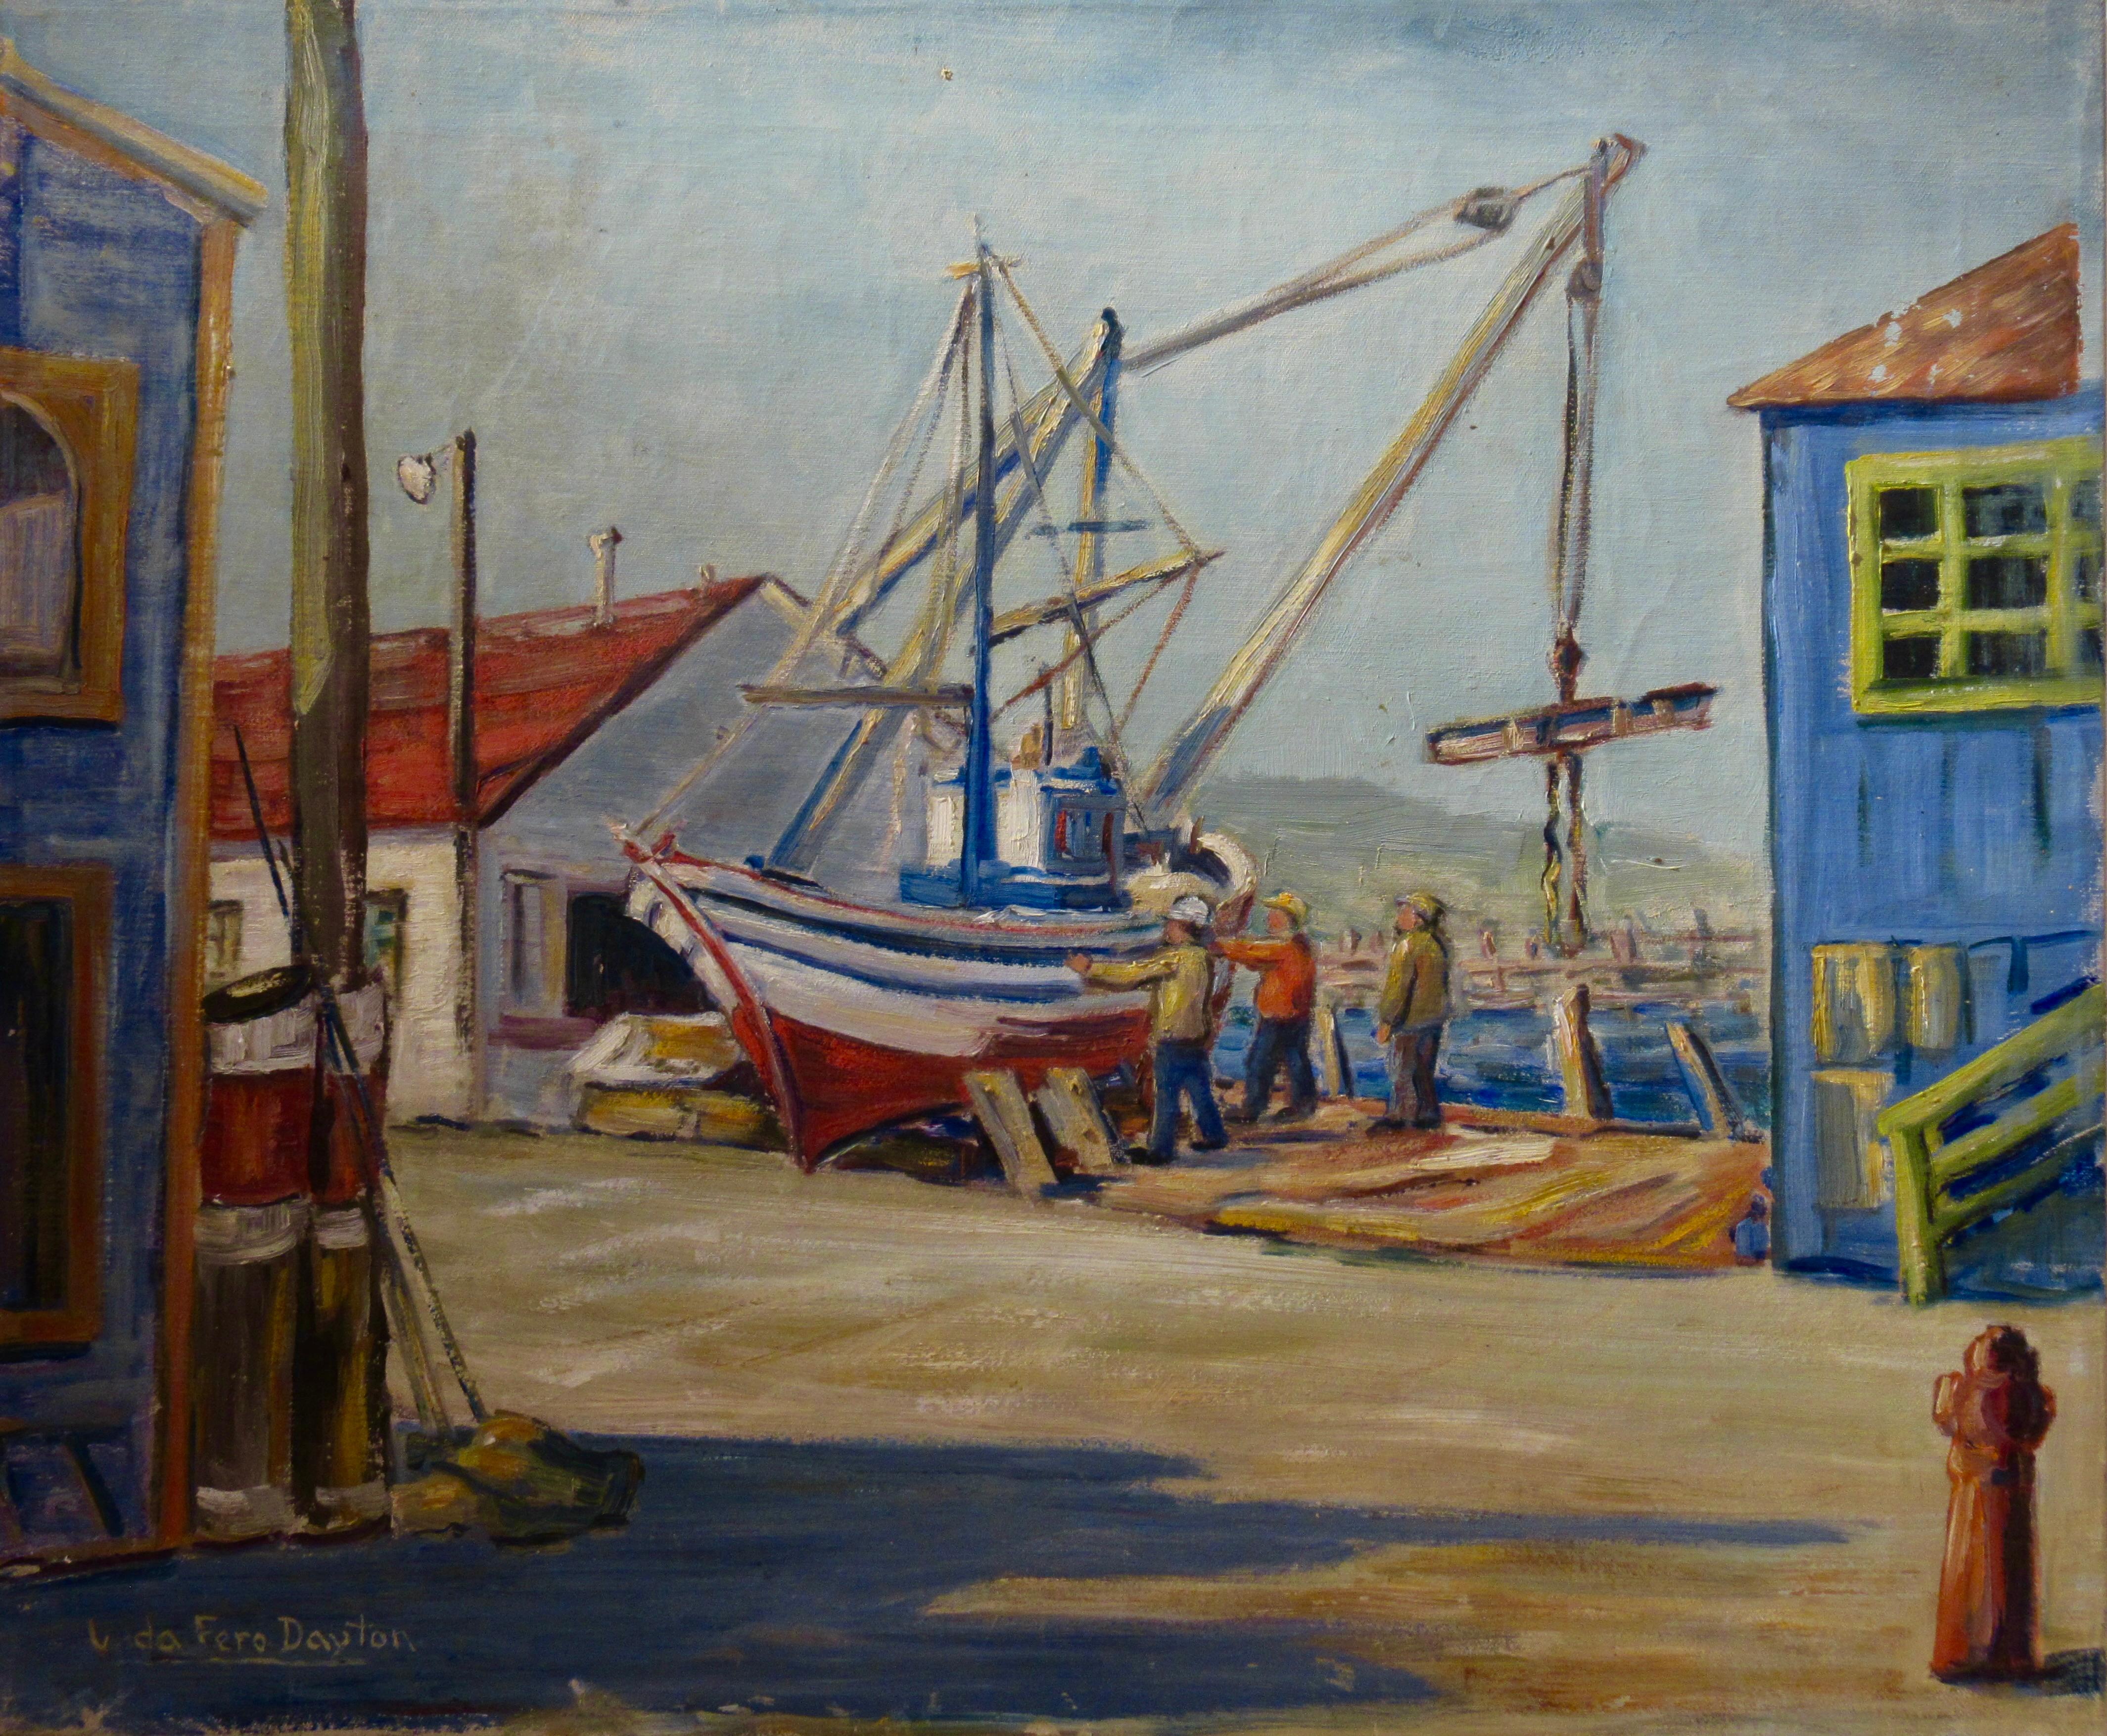 Veda Fero Carnaham Dayton Figurative Painting - Boats repairs, Monterey Dock